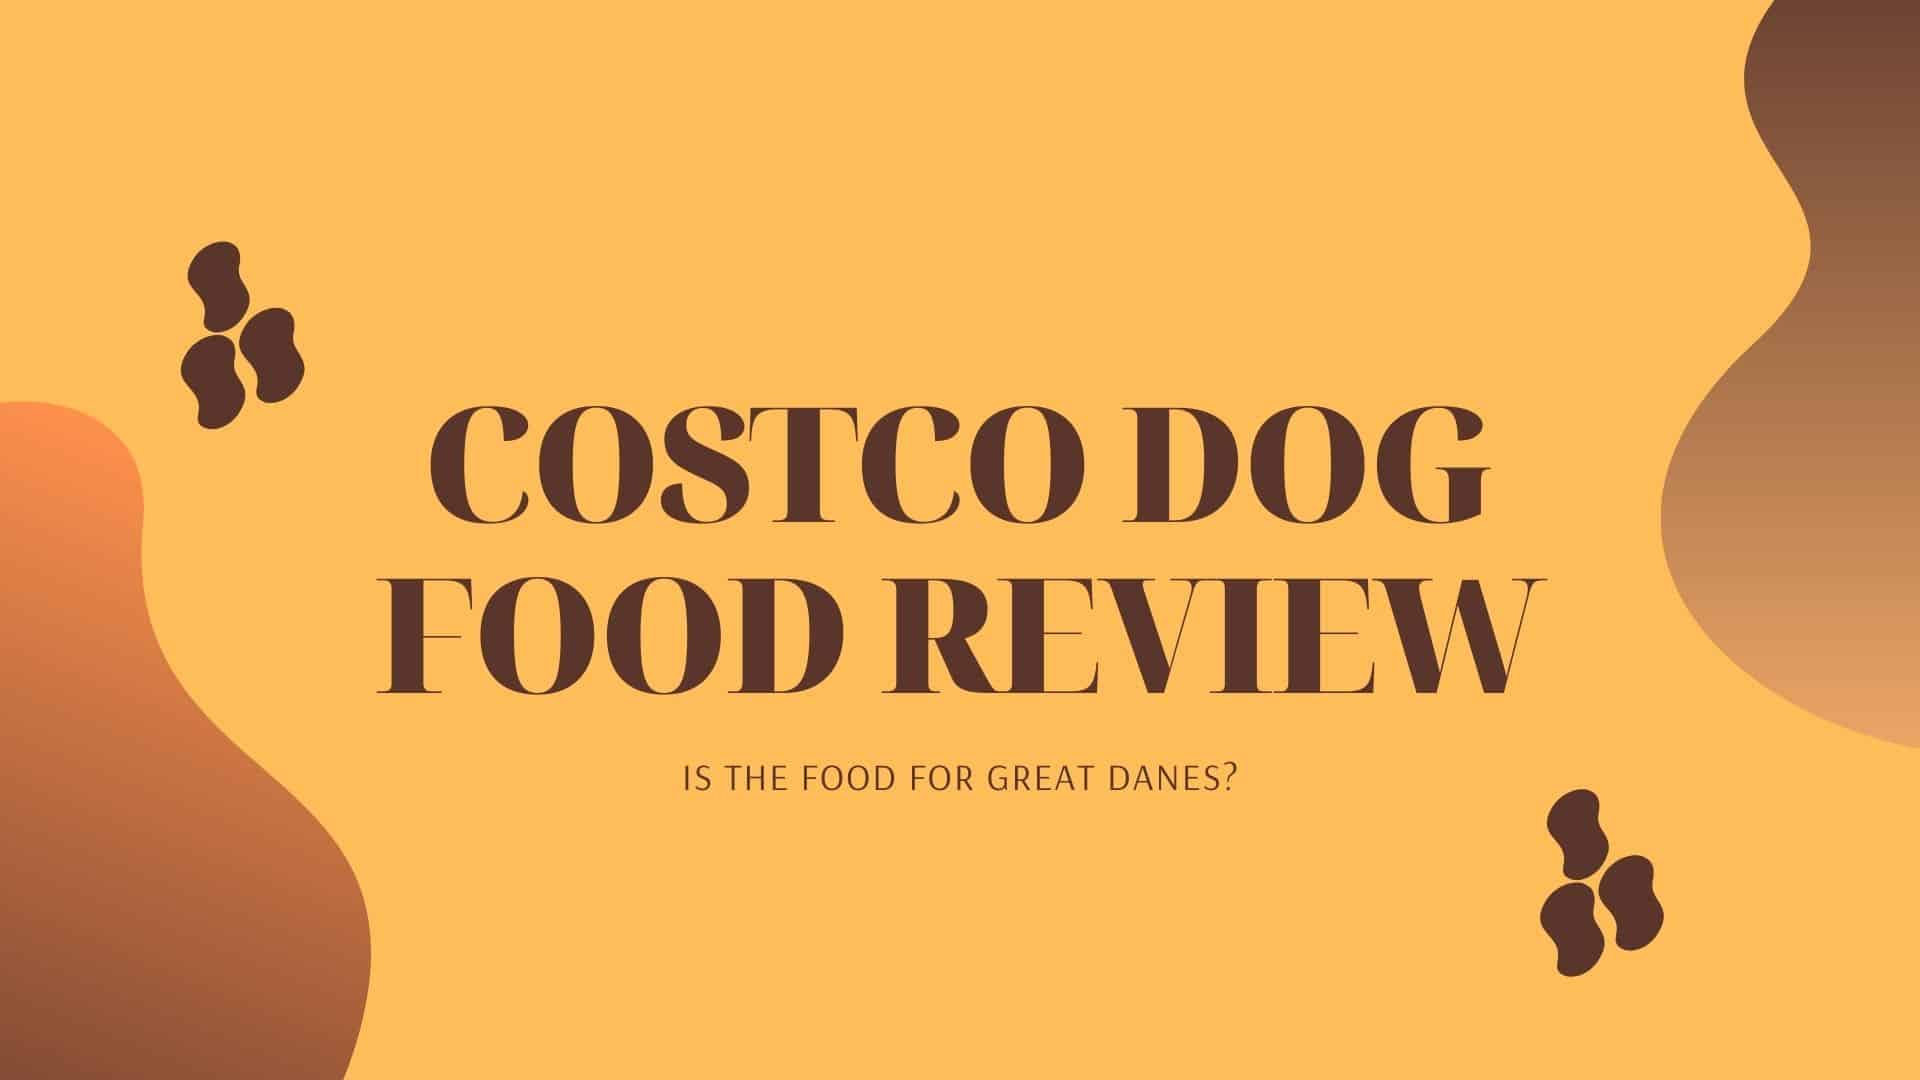 Costco-Dog-Food-Great-Danes.jpg